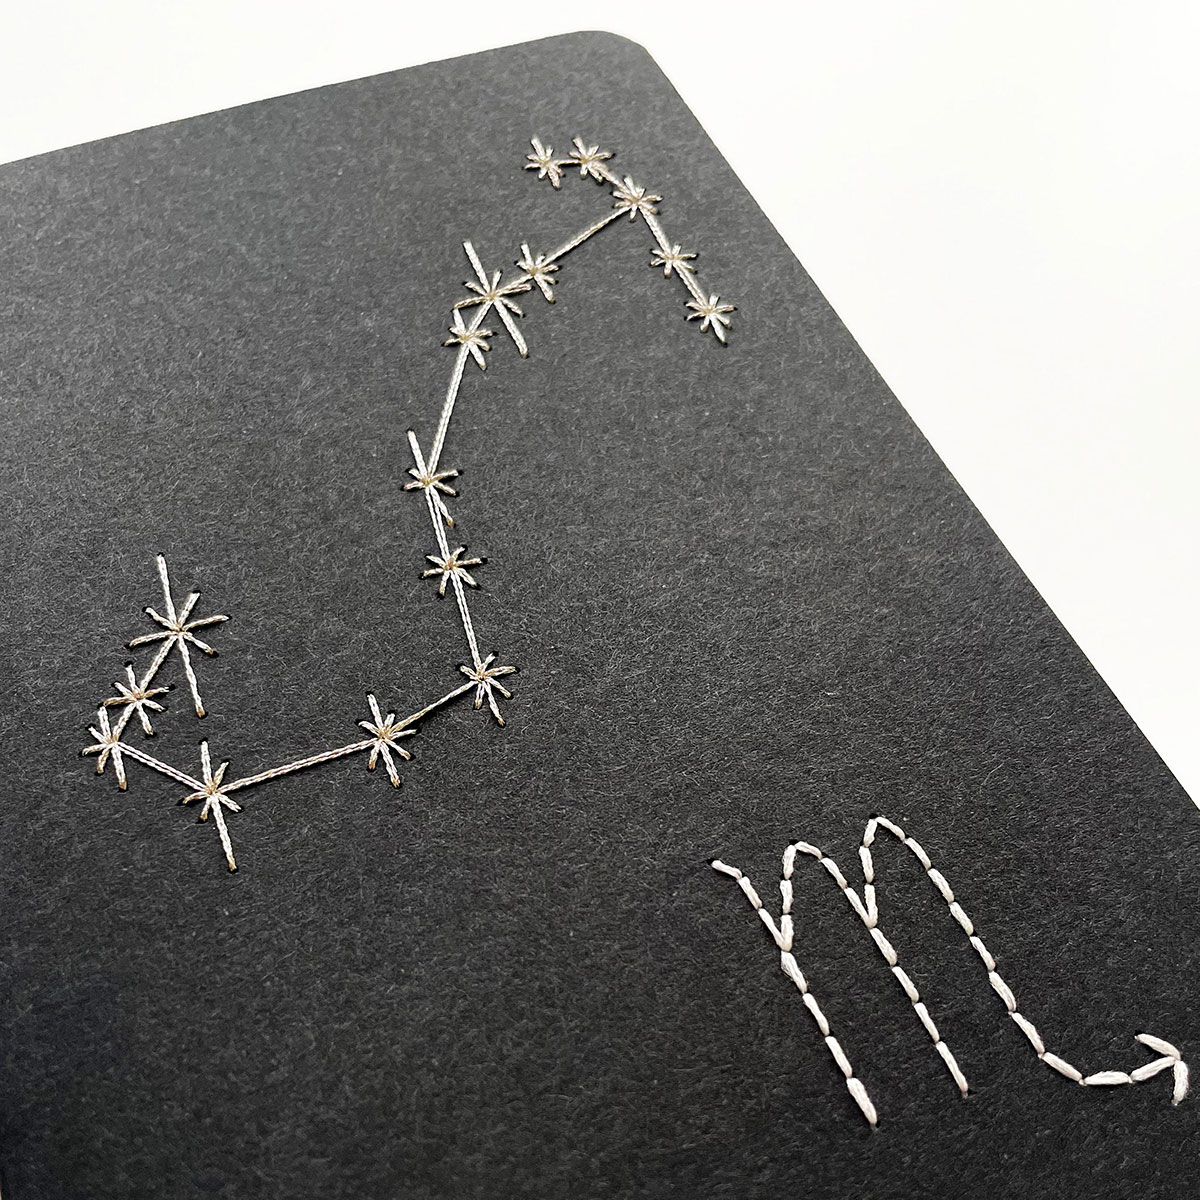 Scorpio constellation paper embroidery by Mayuka Fiber Art - Maydel